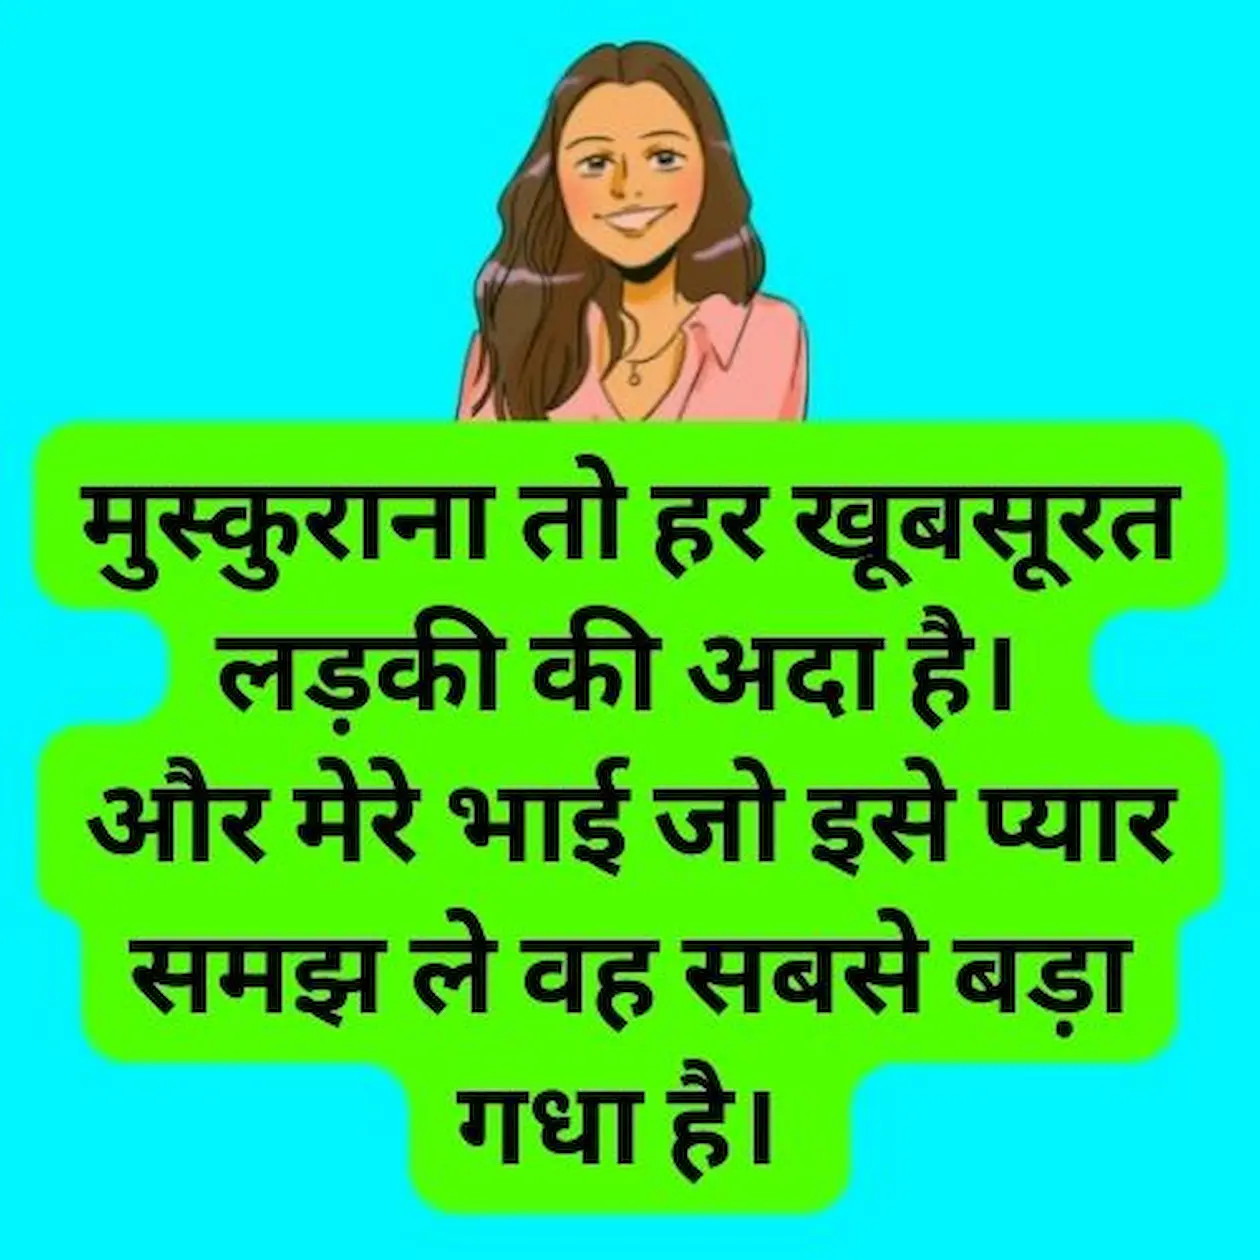 A smiling girl animation. Funny joke in Hindi, misunderstanding the smile of the girl as love.